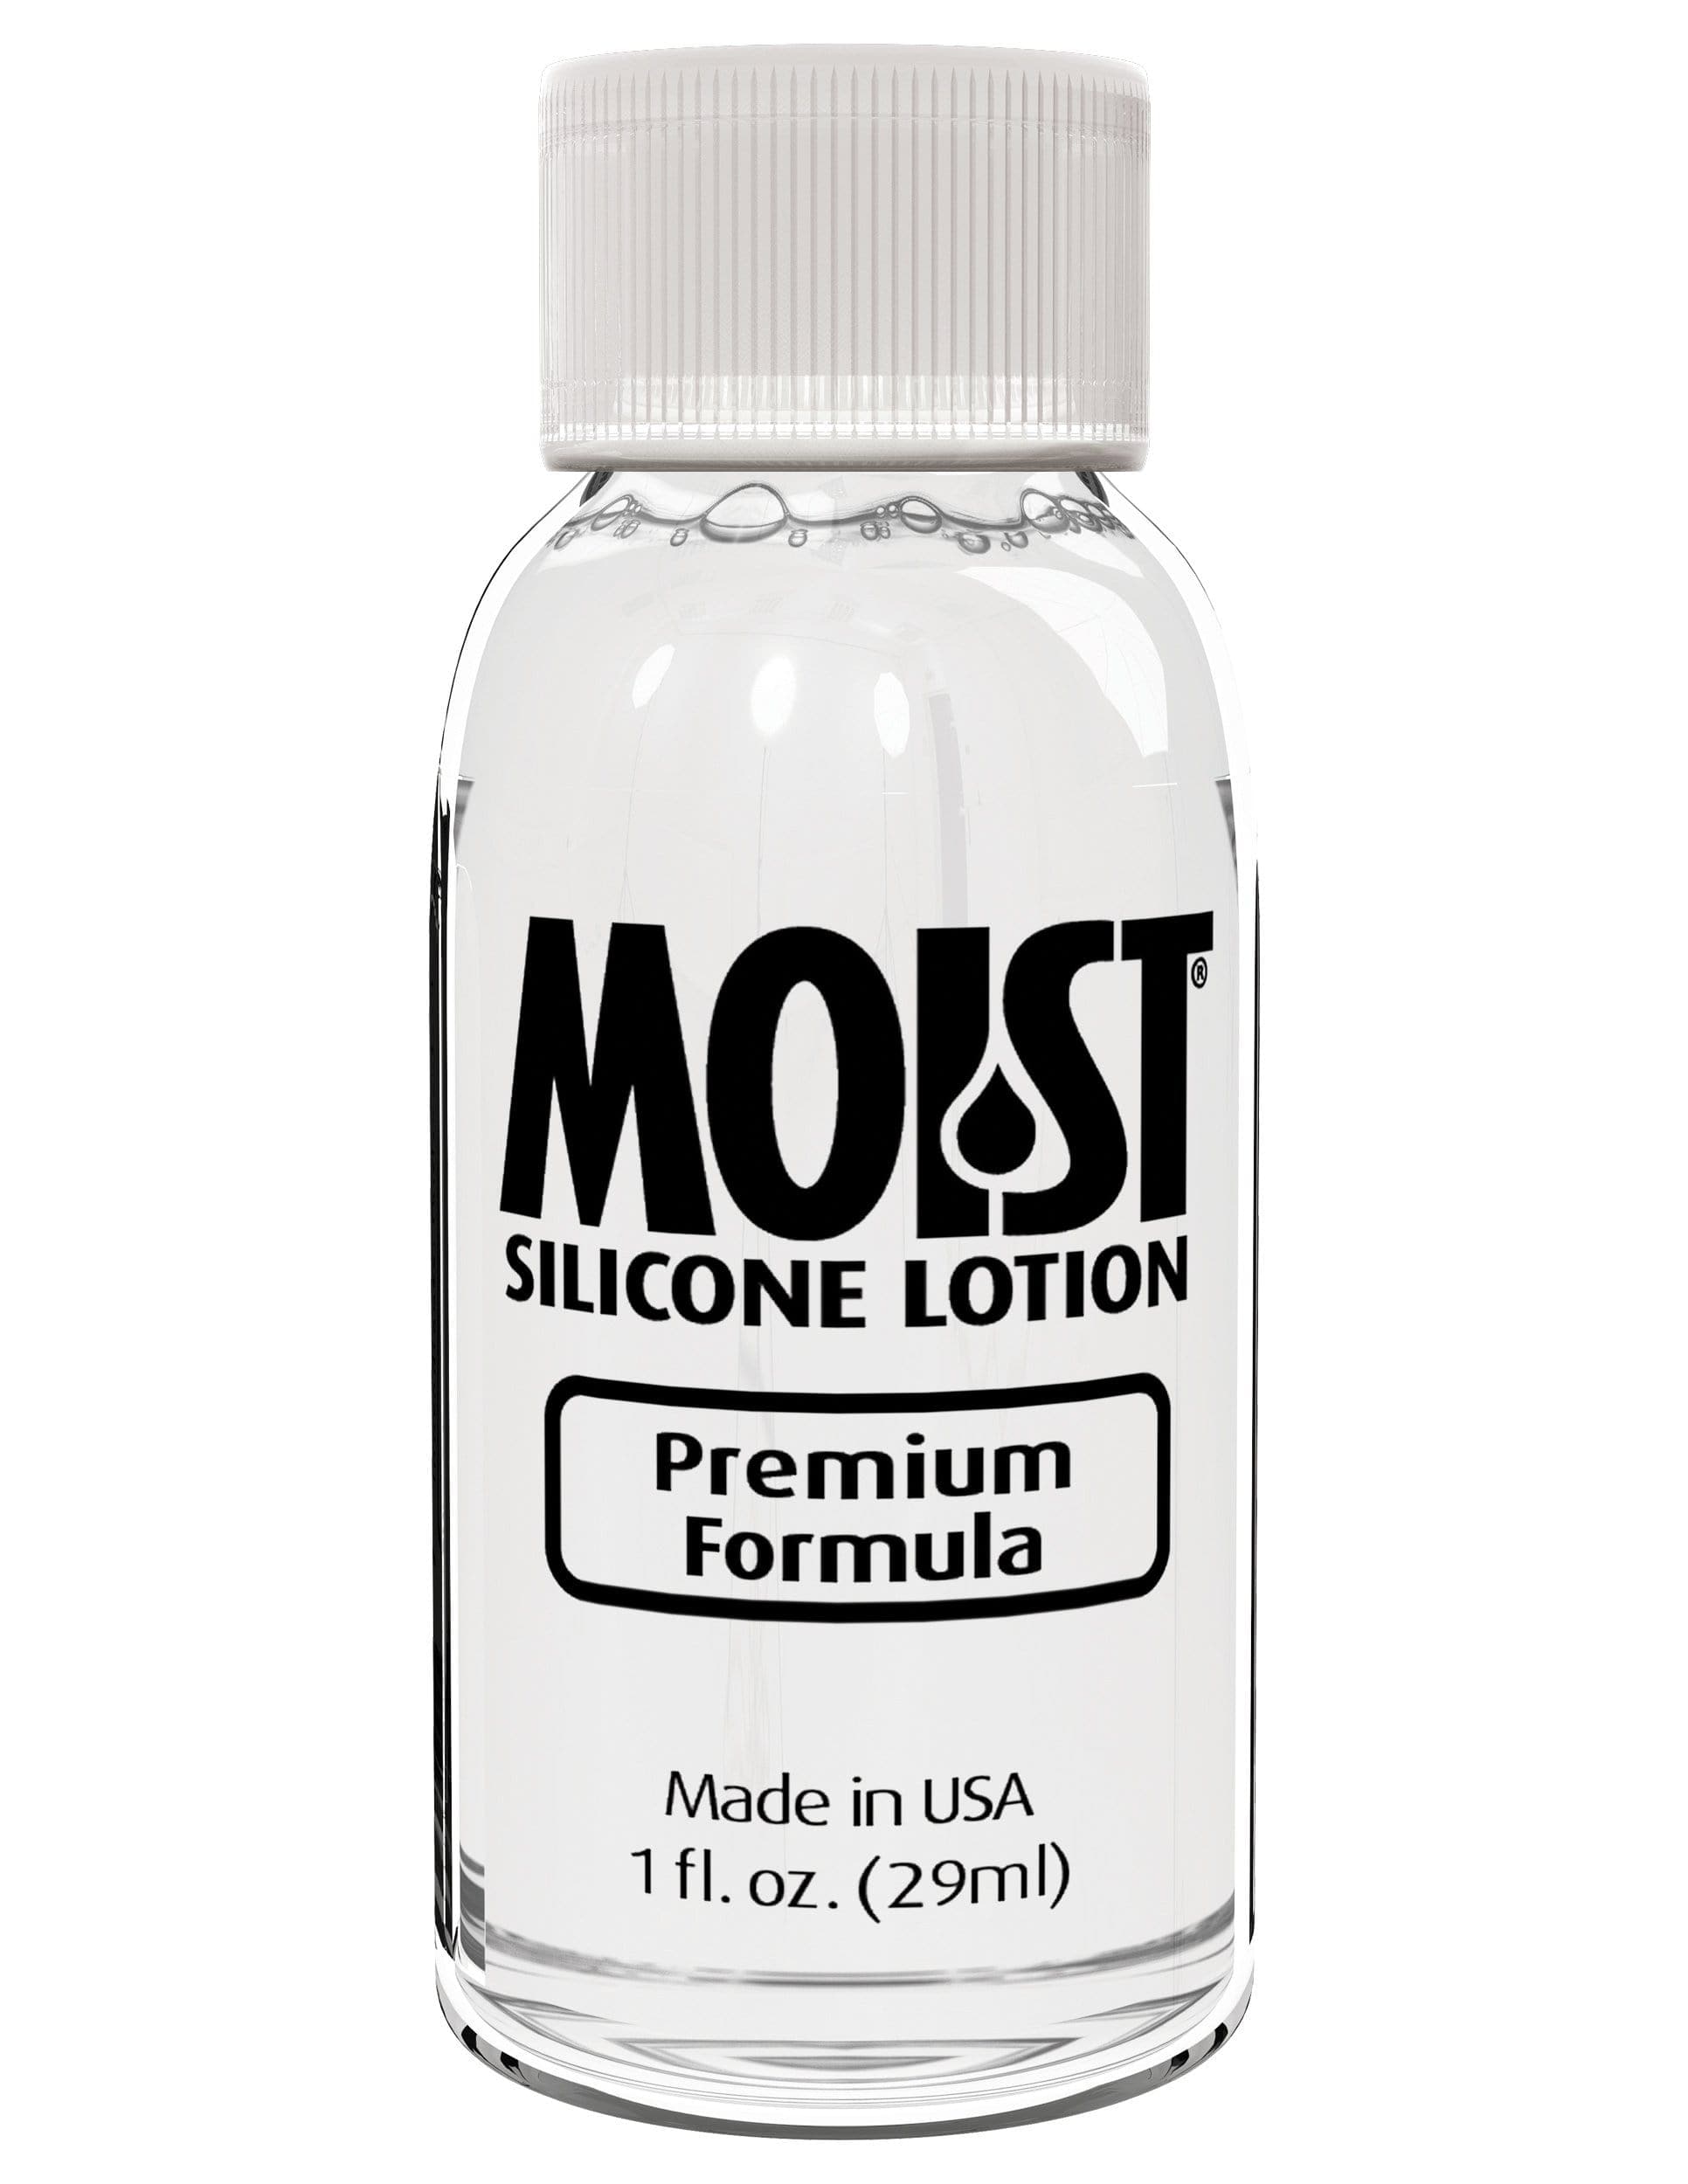 moist silicone lotion 1 fl oz